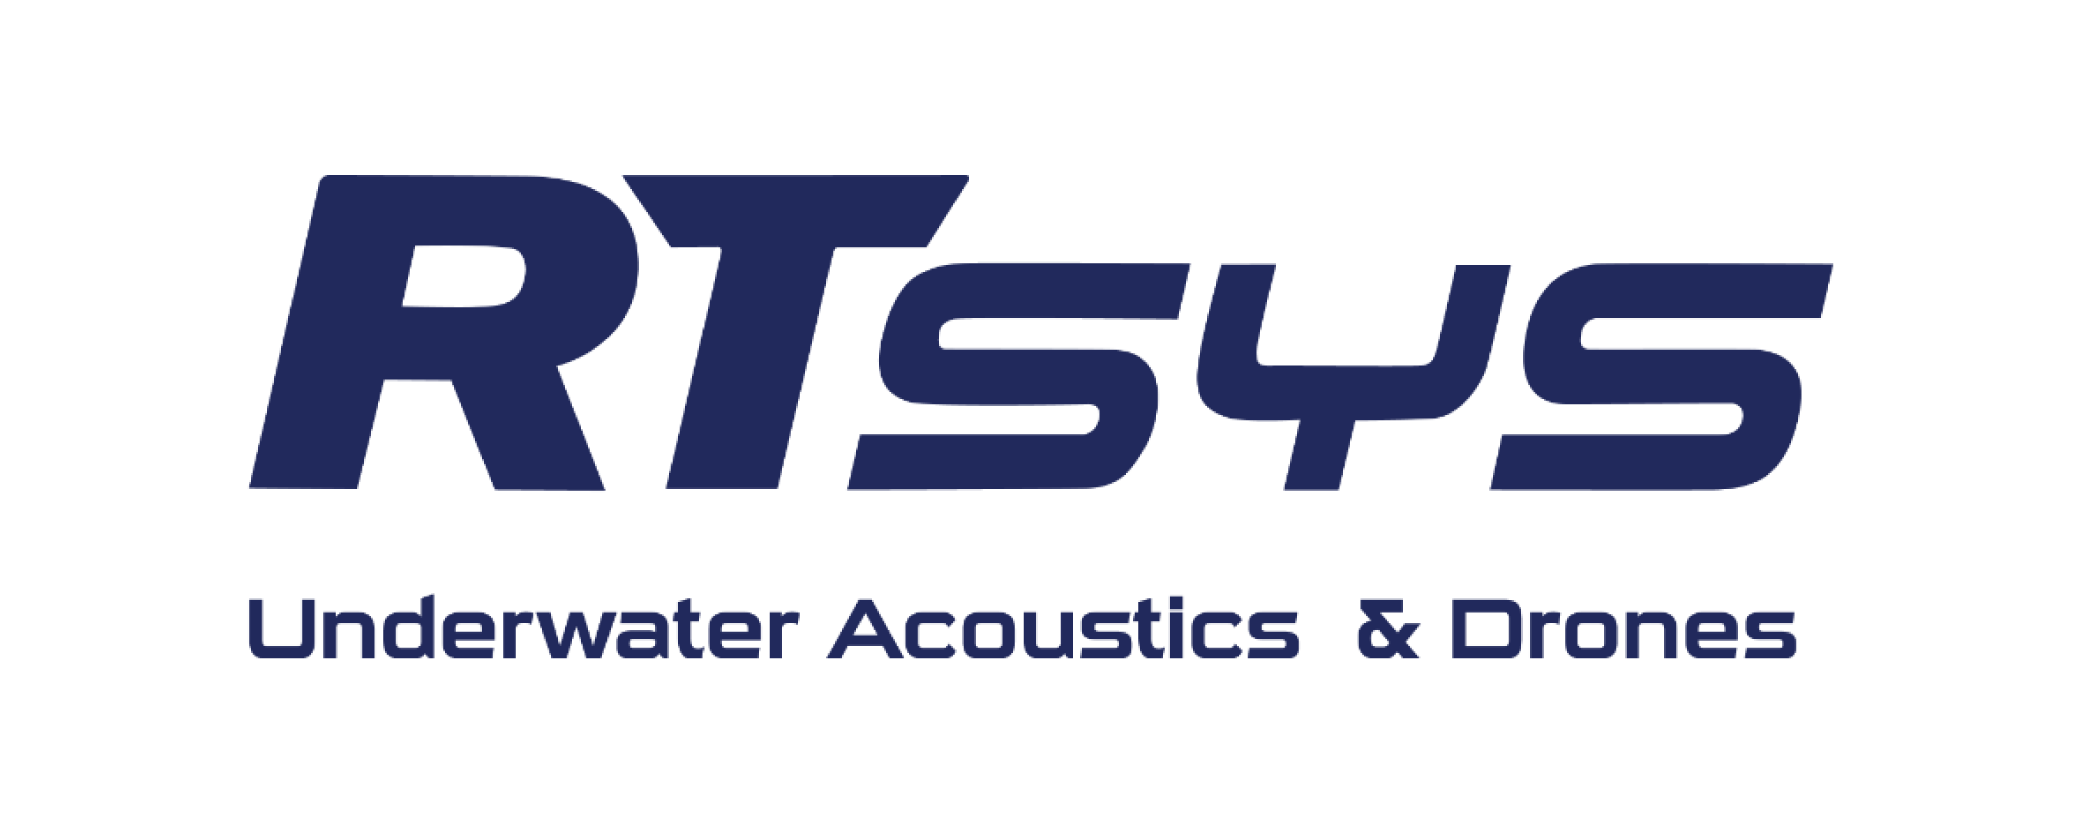 RTsys logo